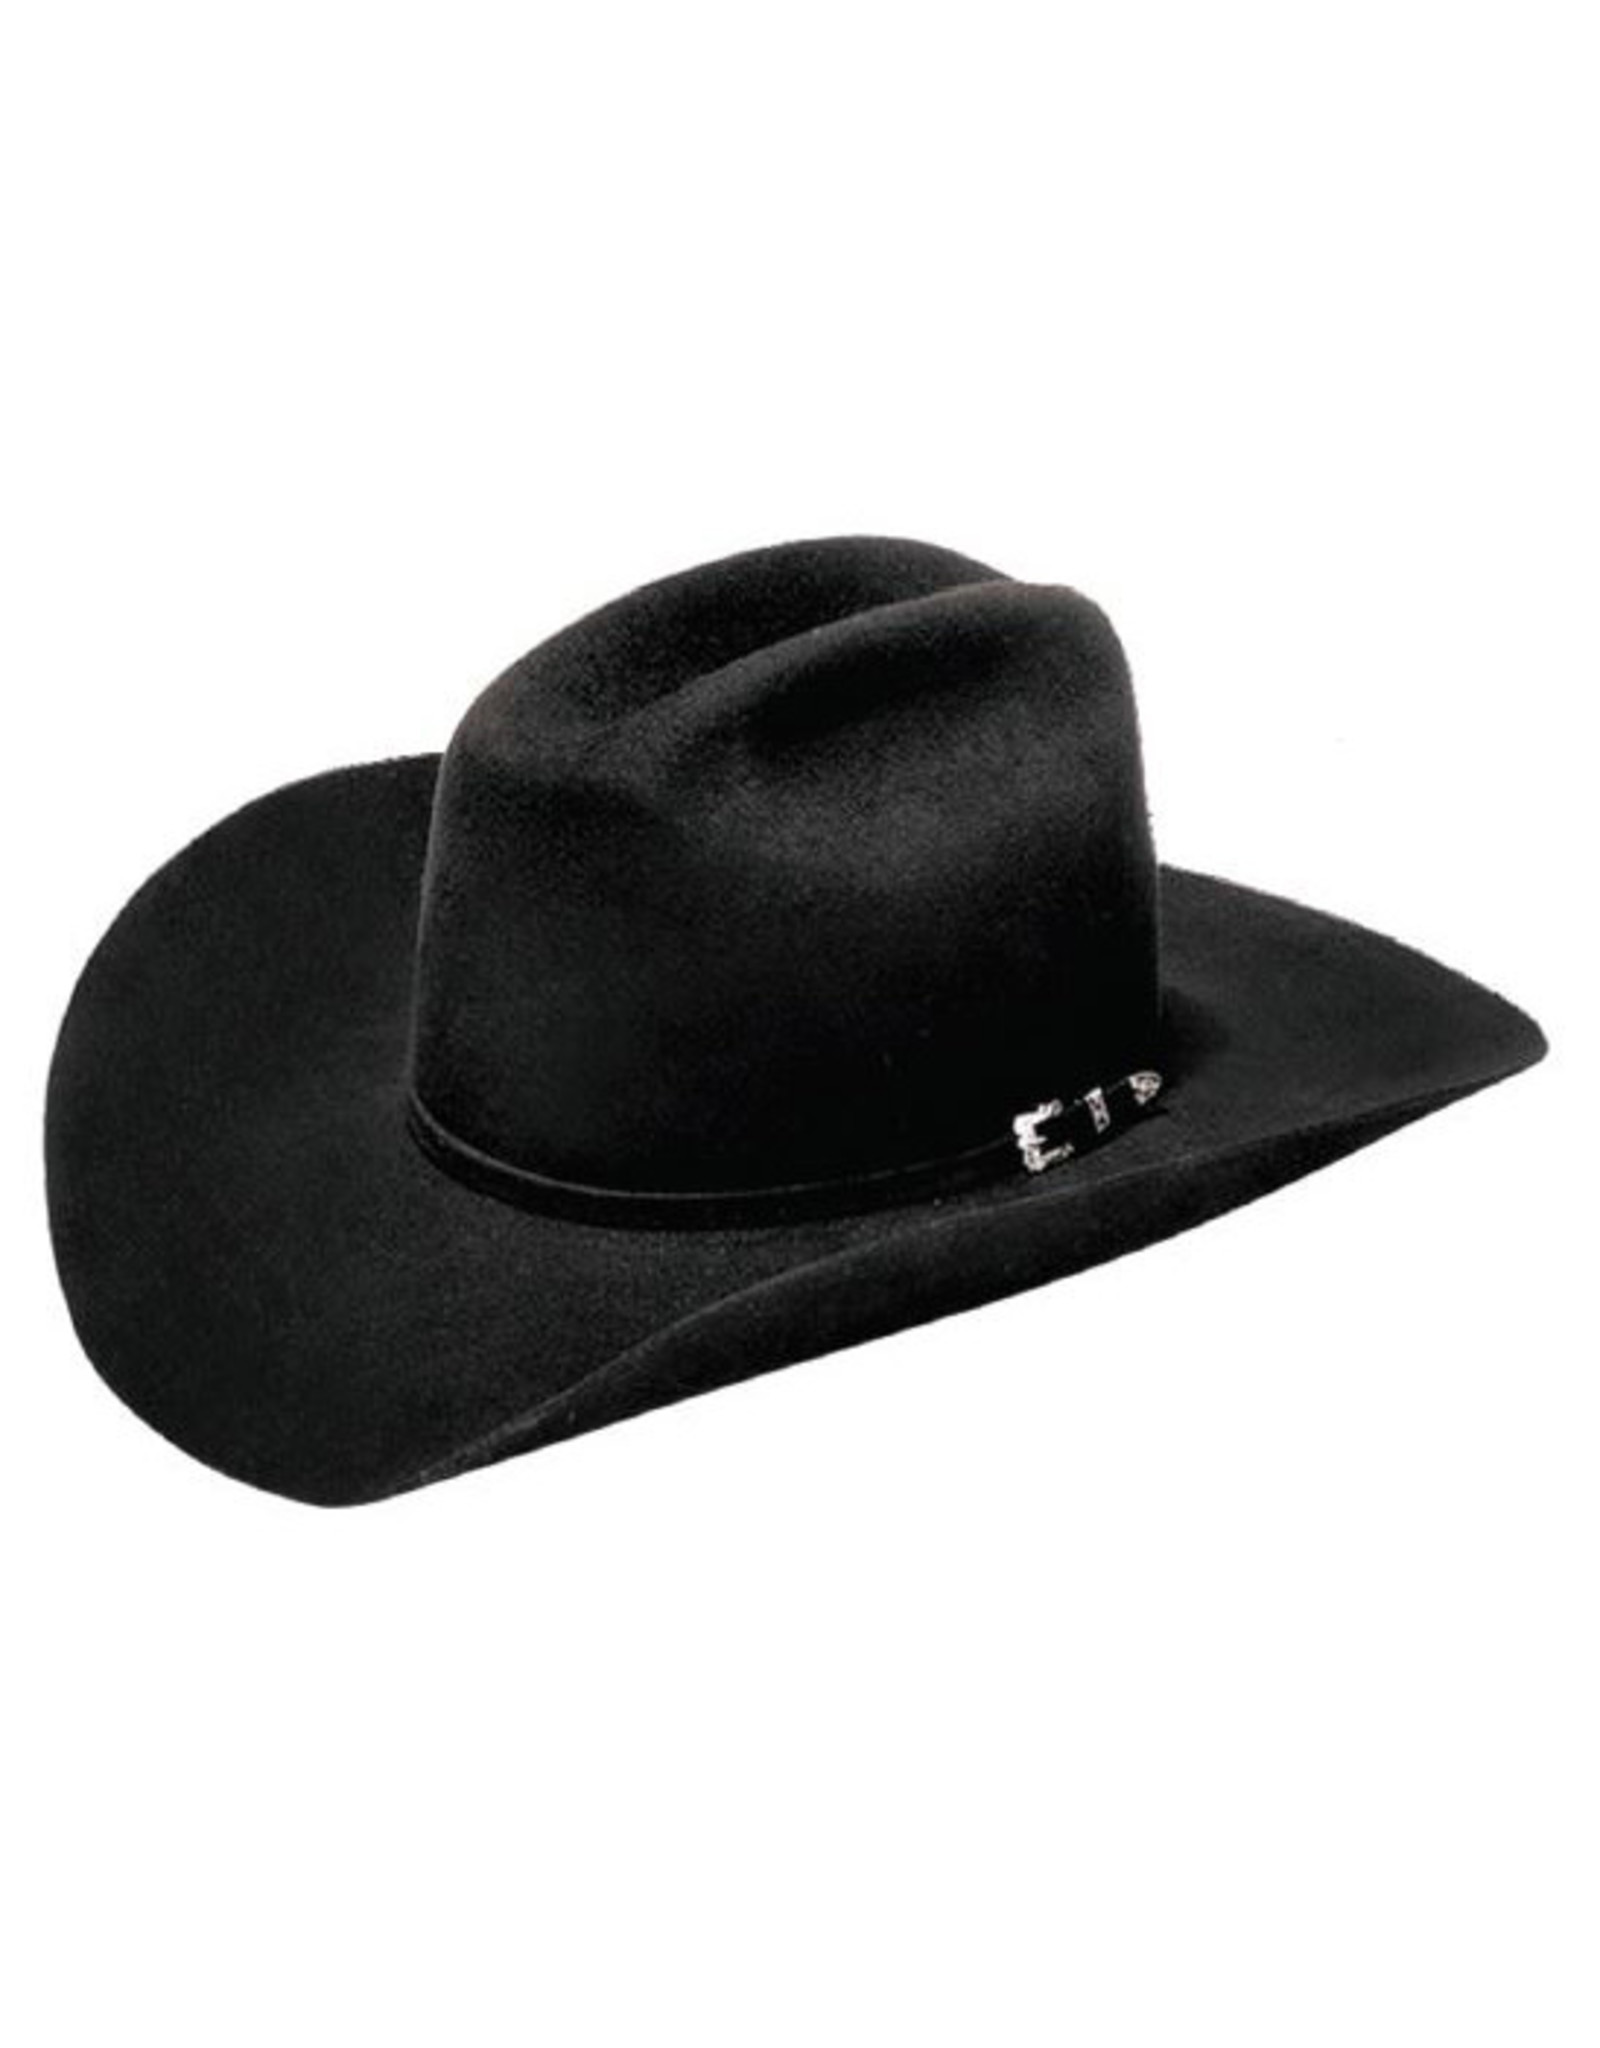 Master Hatters Denton Black Felt Cowboy Hat M37881541